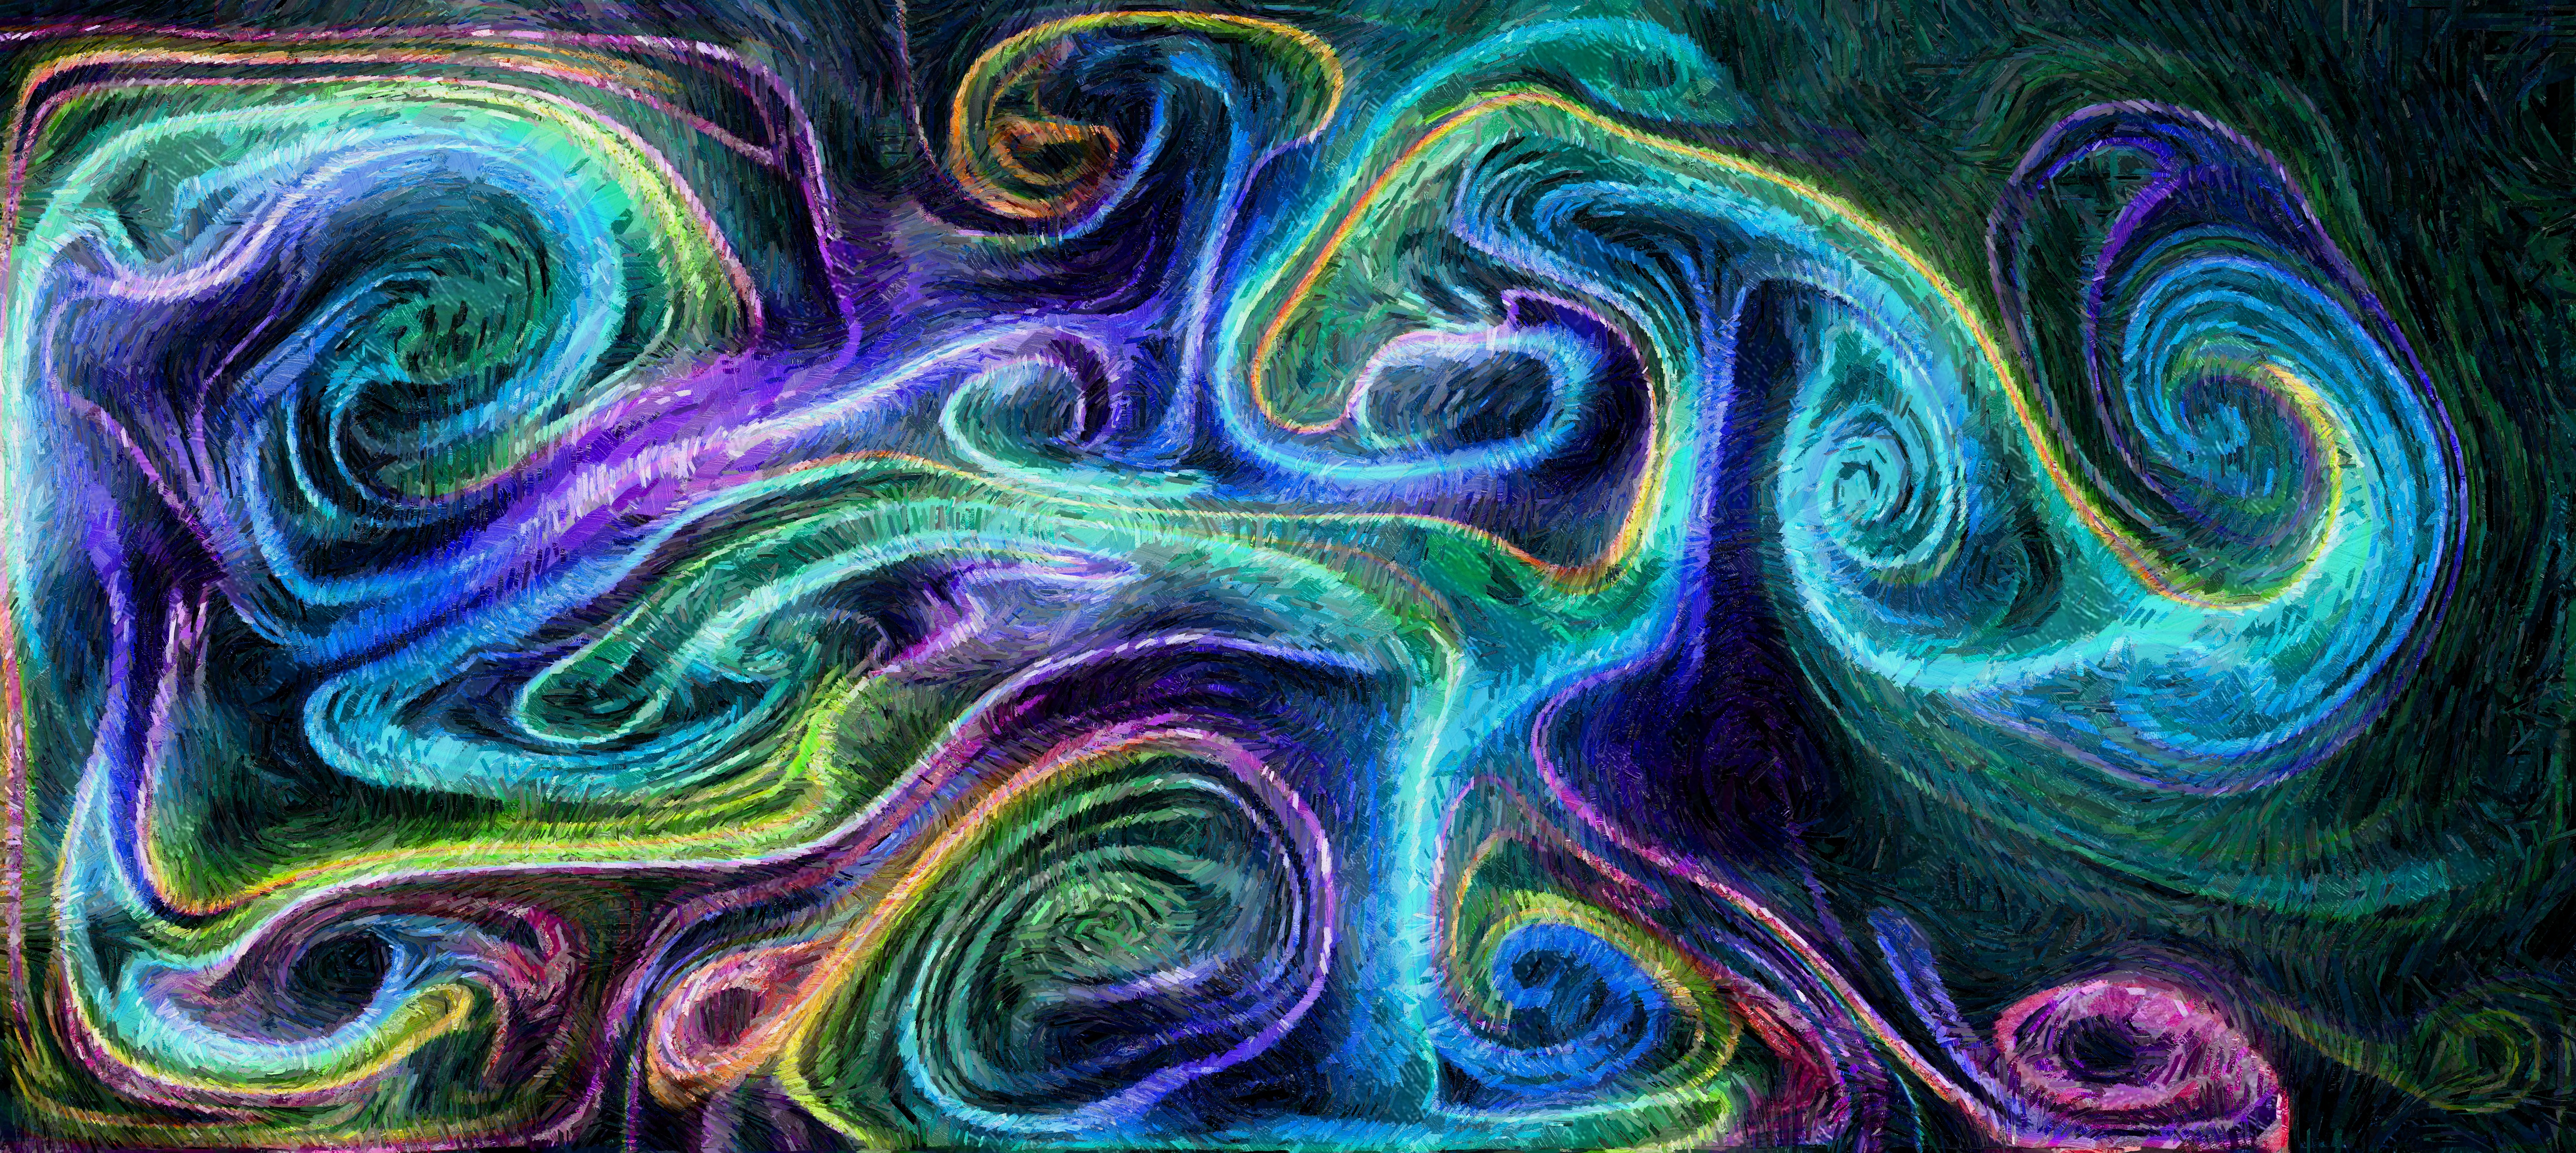 General 5600x2506 neon paint splash canvas acrylic colorful fluid swirly dark